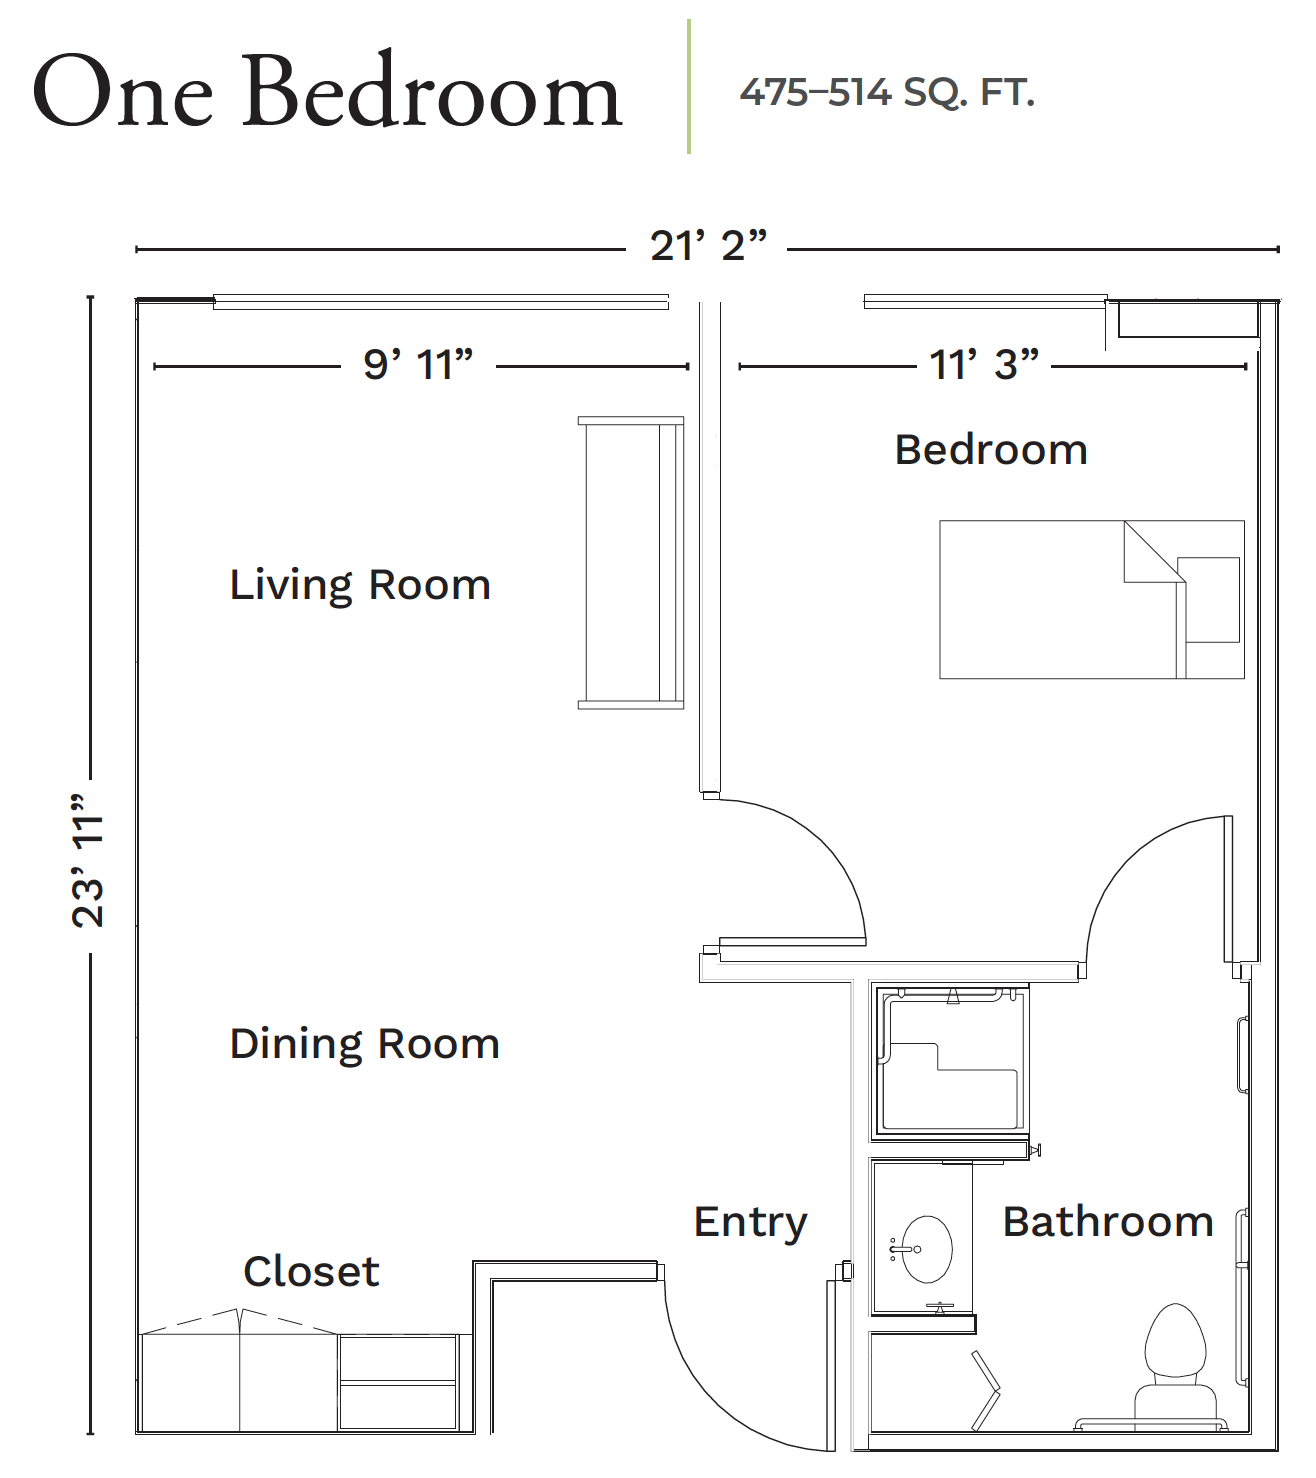 Floor plan of one-bedroom senior living unit showing living room, dining room, bedroom, and bathroom.